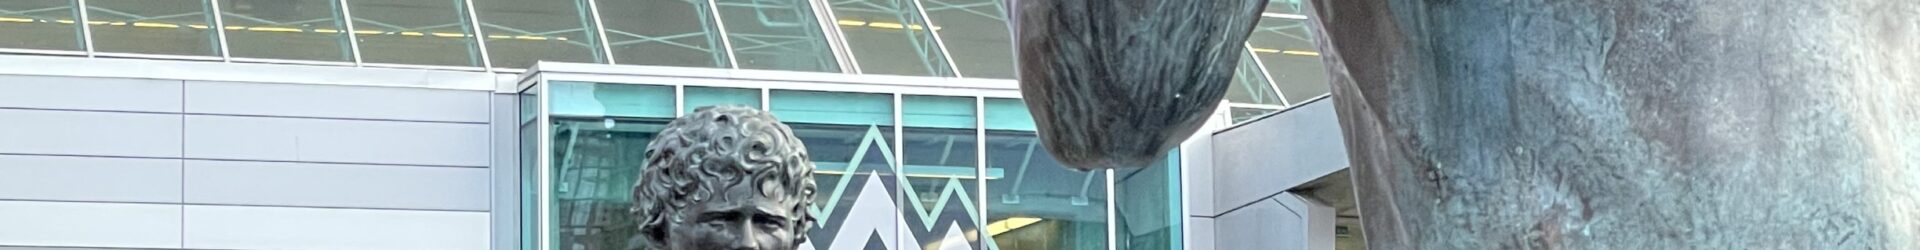 Terry Fox Statue